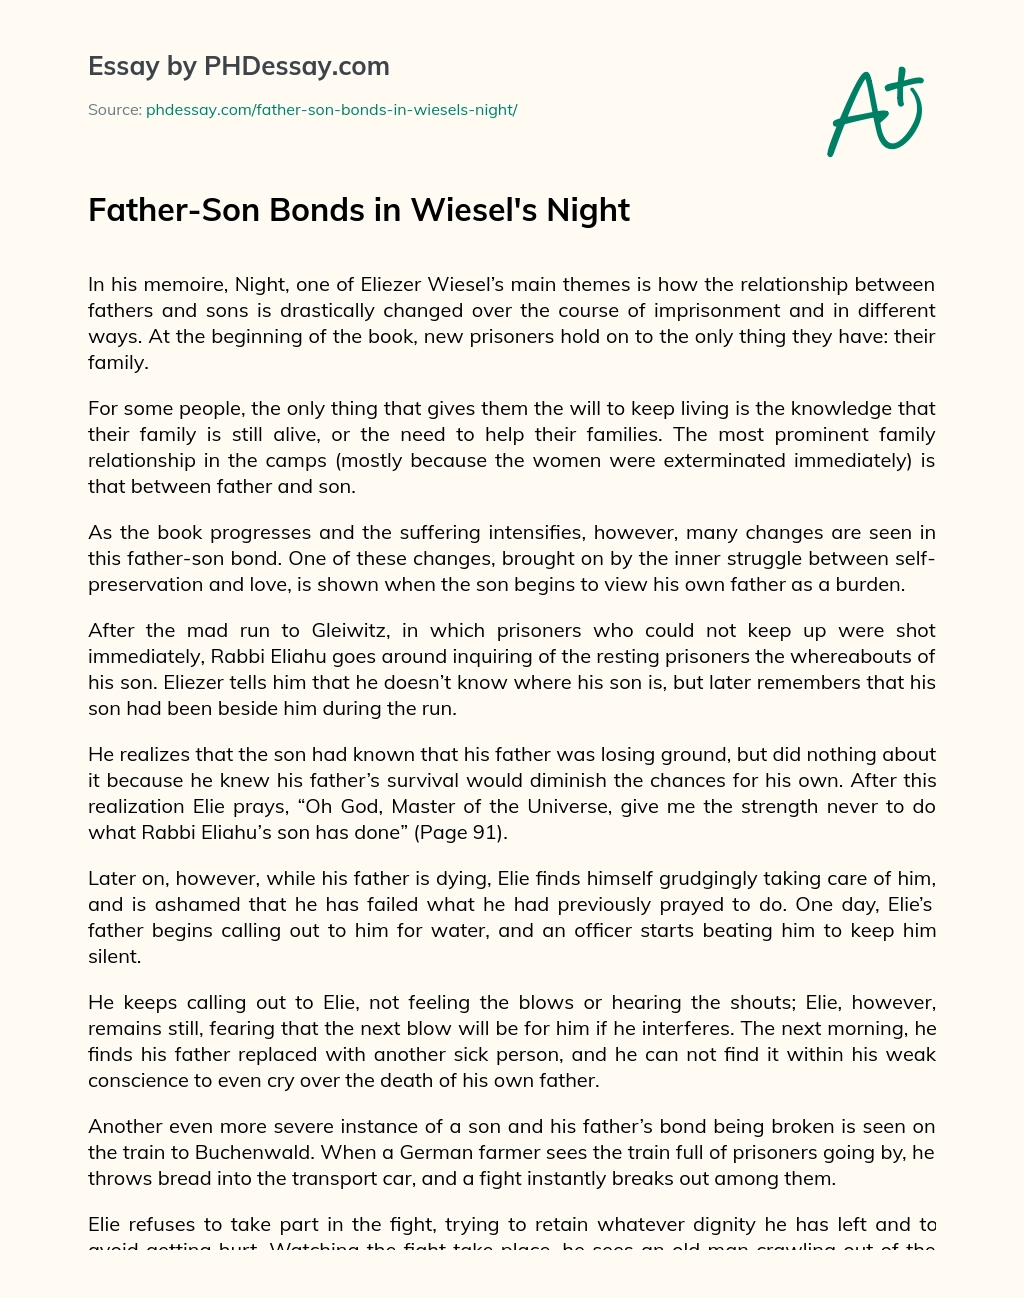 Father-Son Bonds in Wiesel’s Night essay